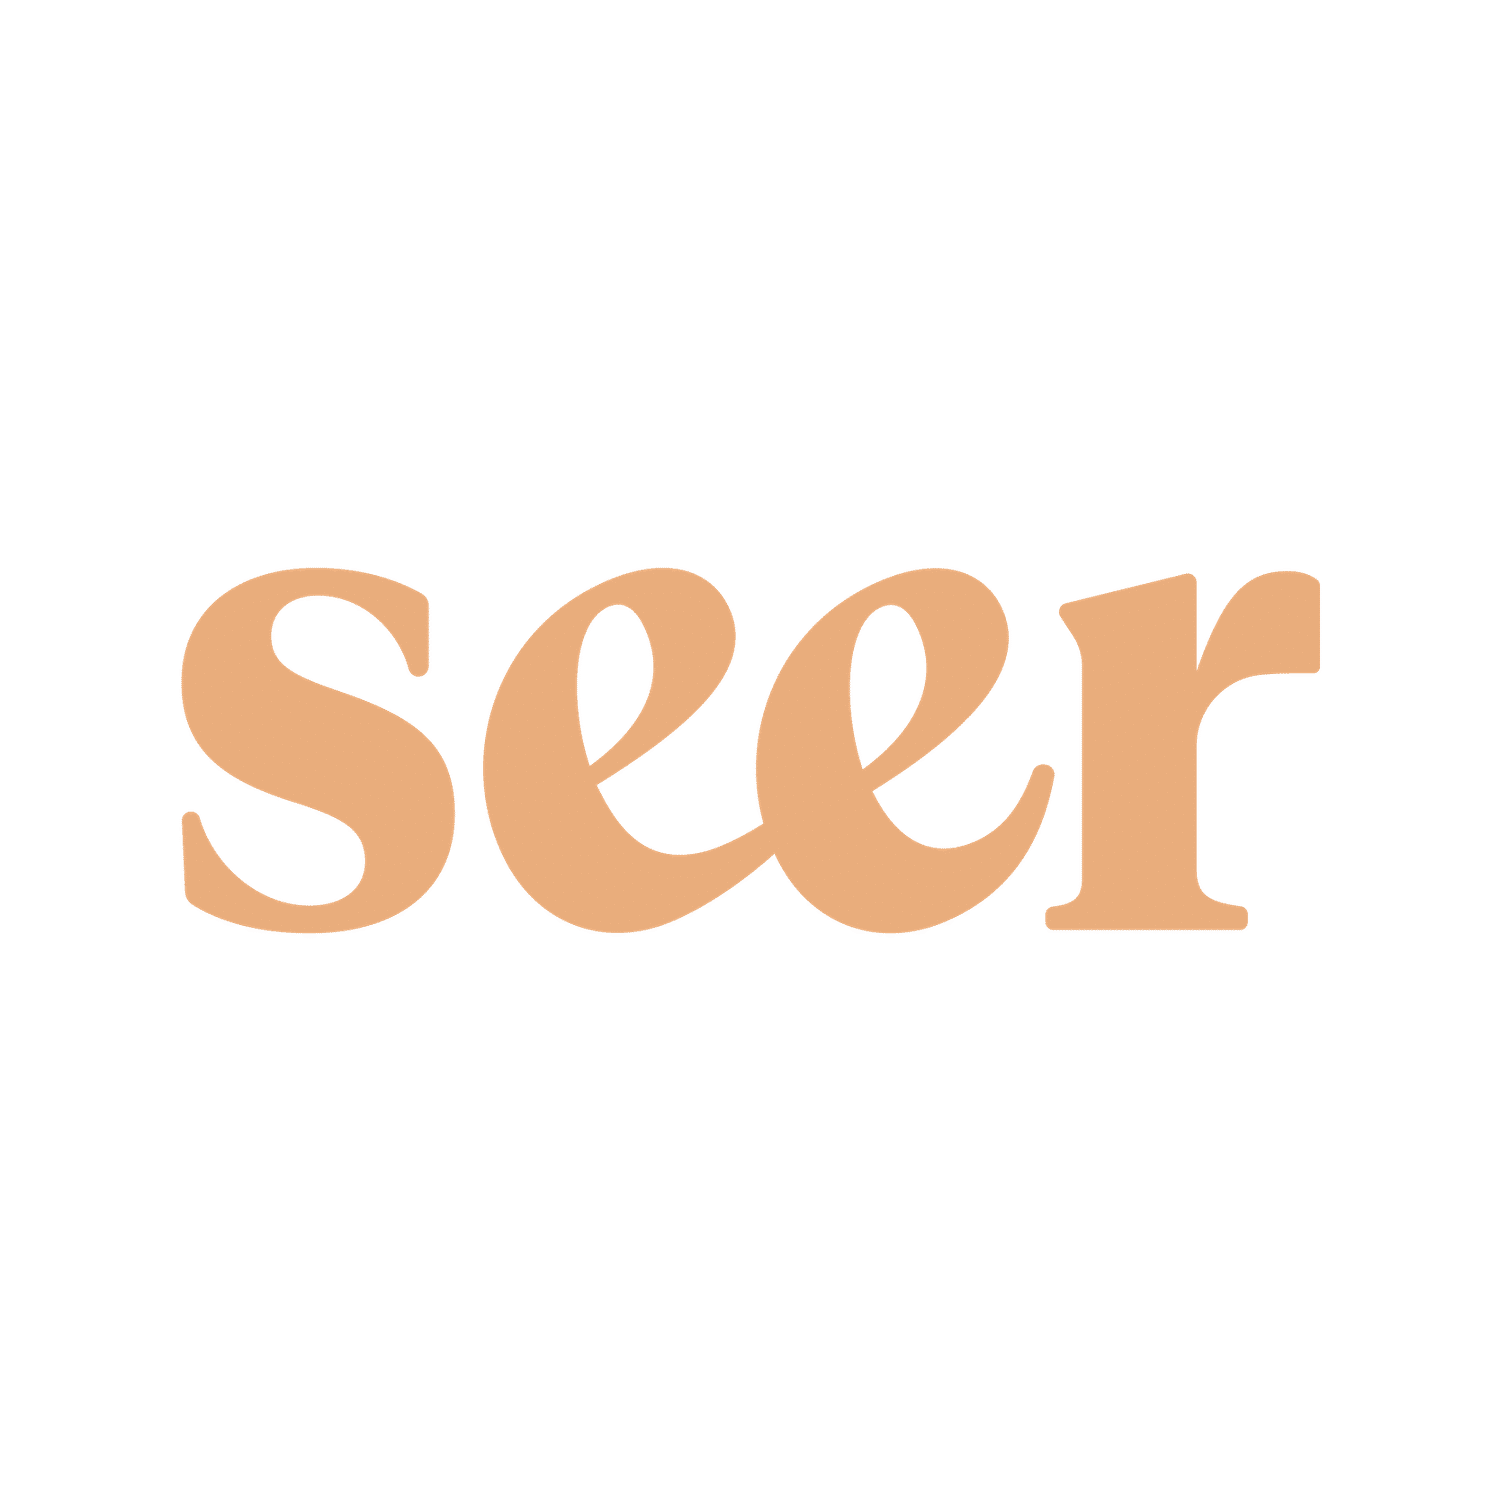 Seer Logo for active job listings